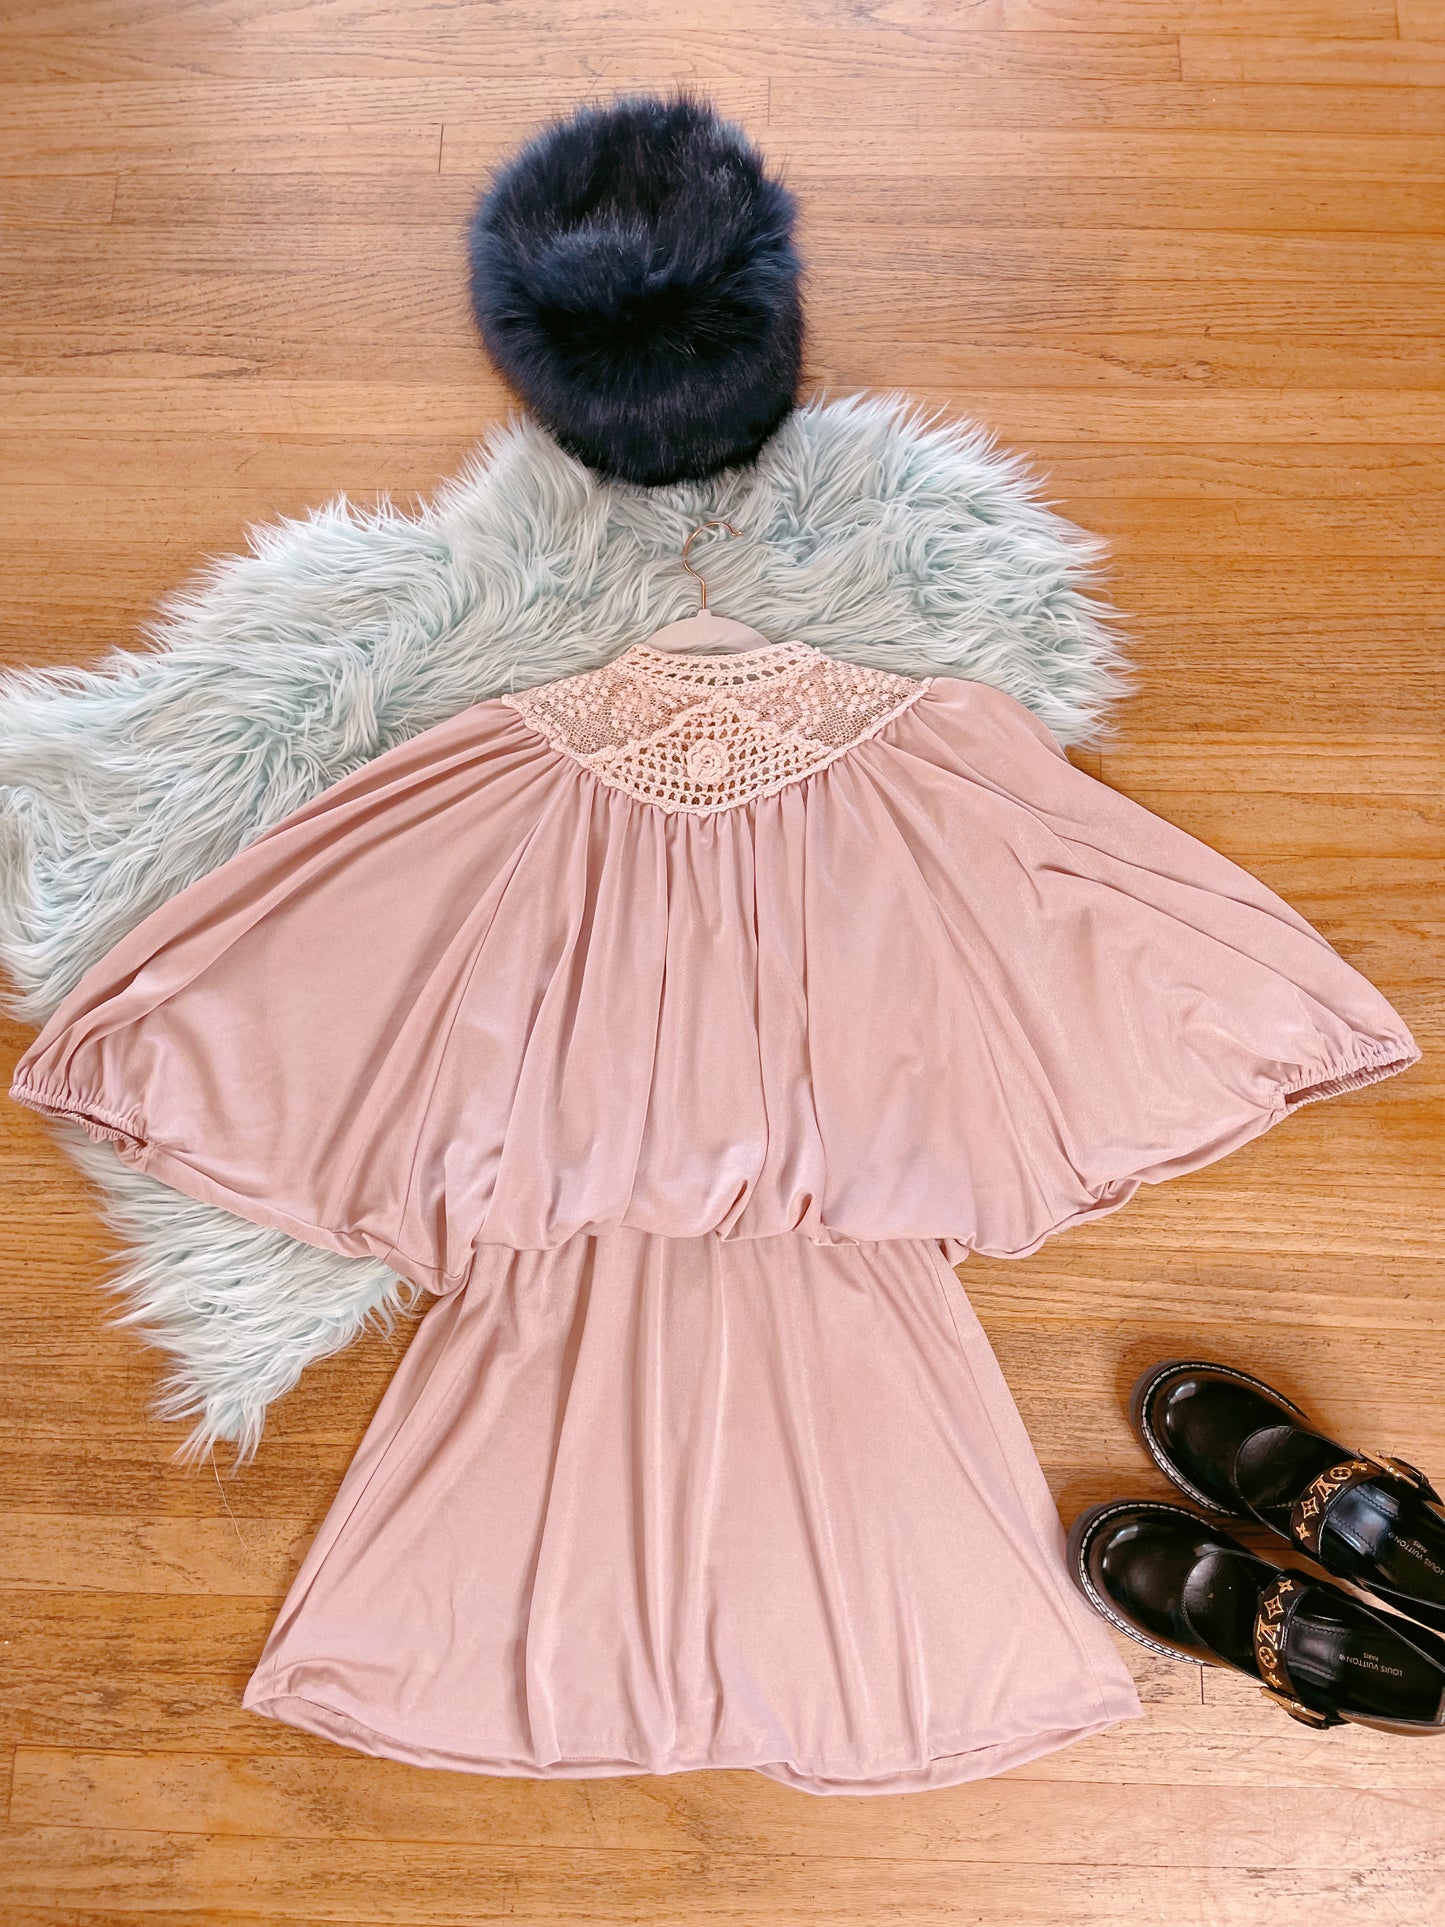 Vintage 70s Rose Pink Batwing Crochet-like Neckline dress Fits sizes XS-M